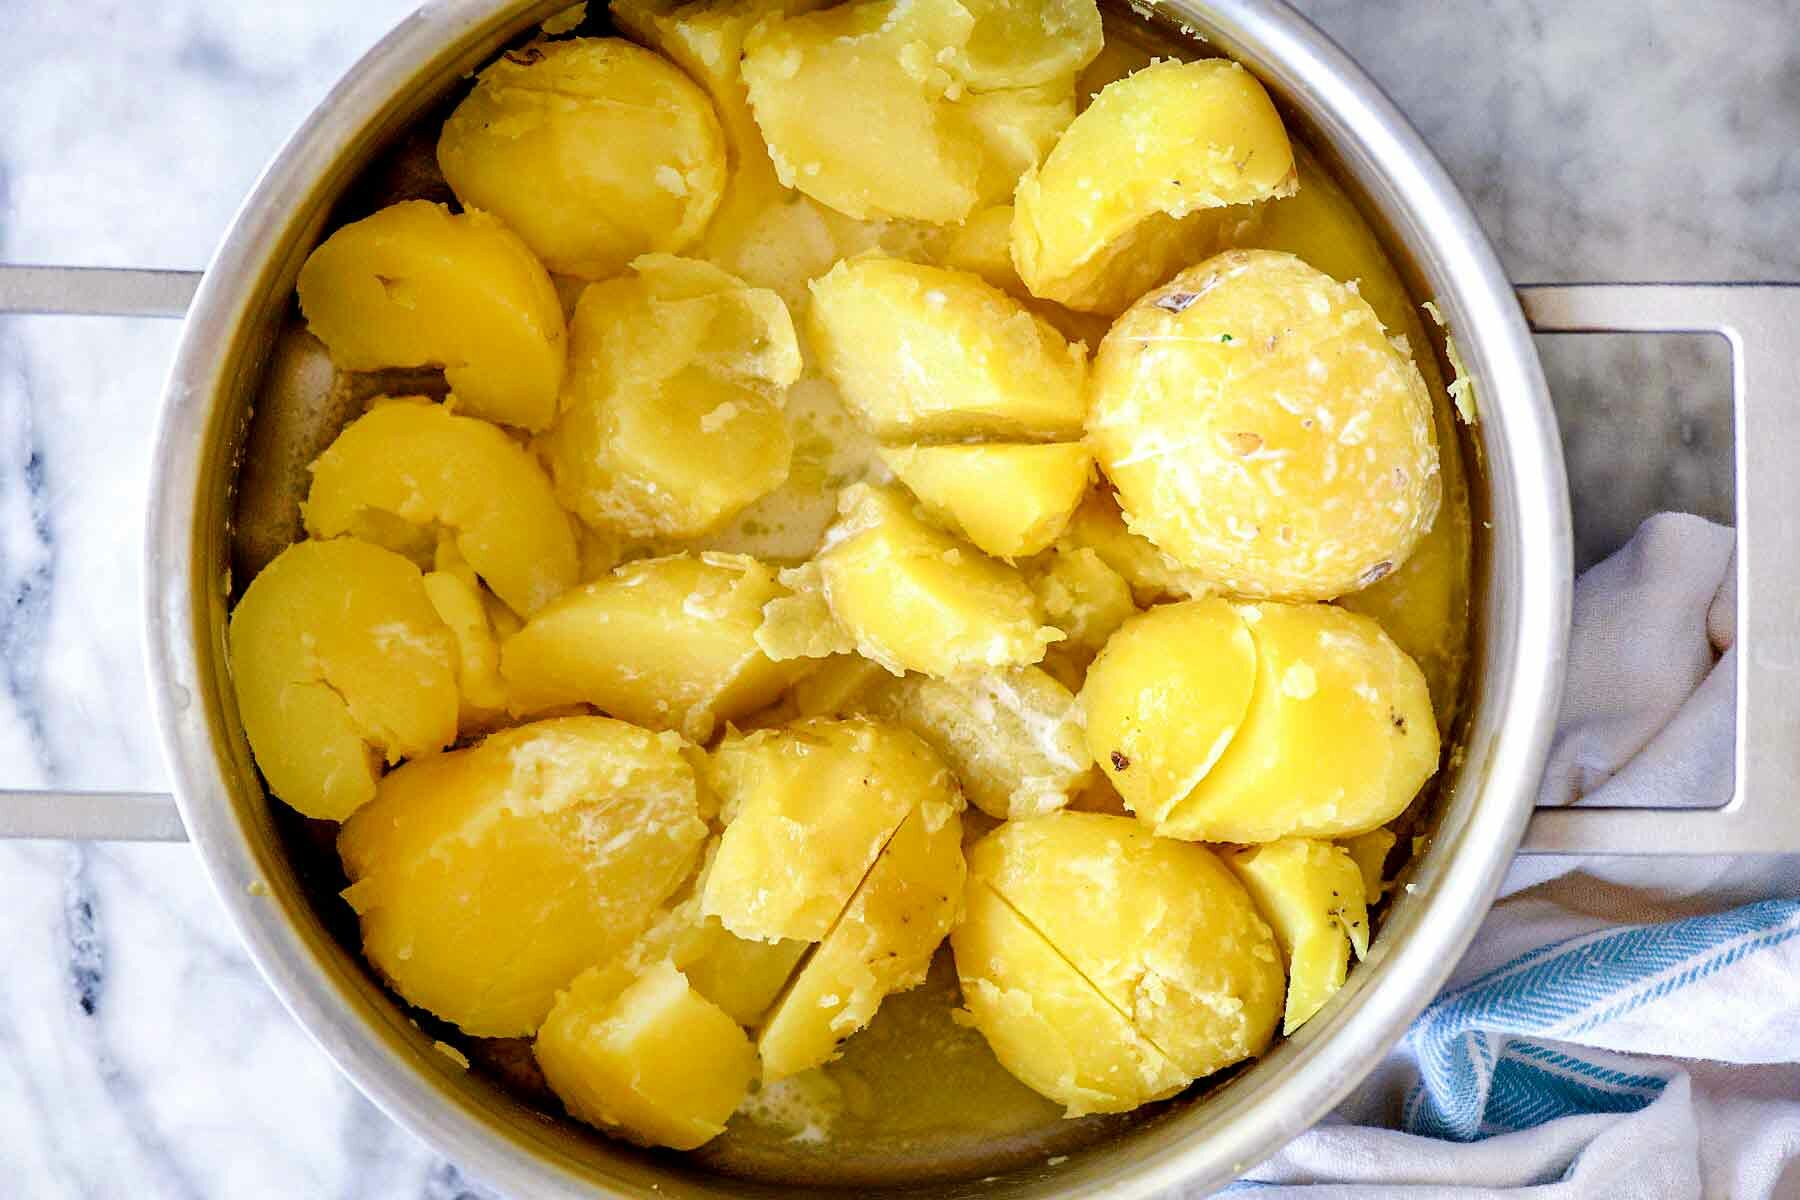 Electric Potato Masher: Masha Makes Light Work of Mashing Vegetables